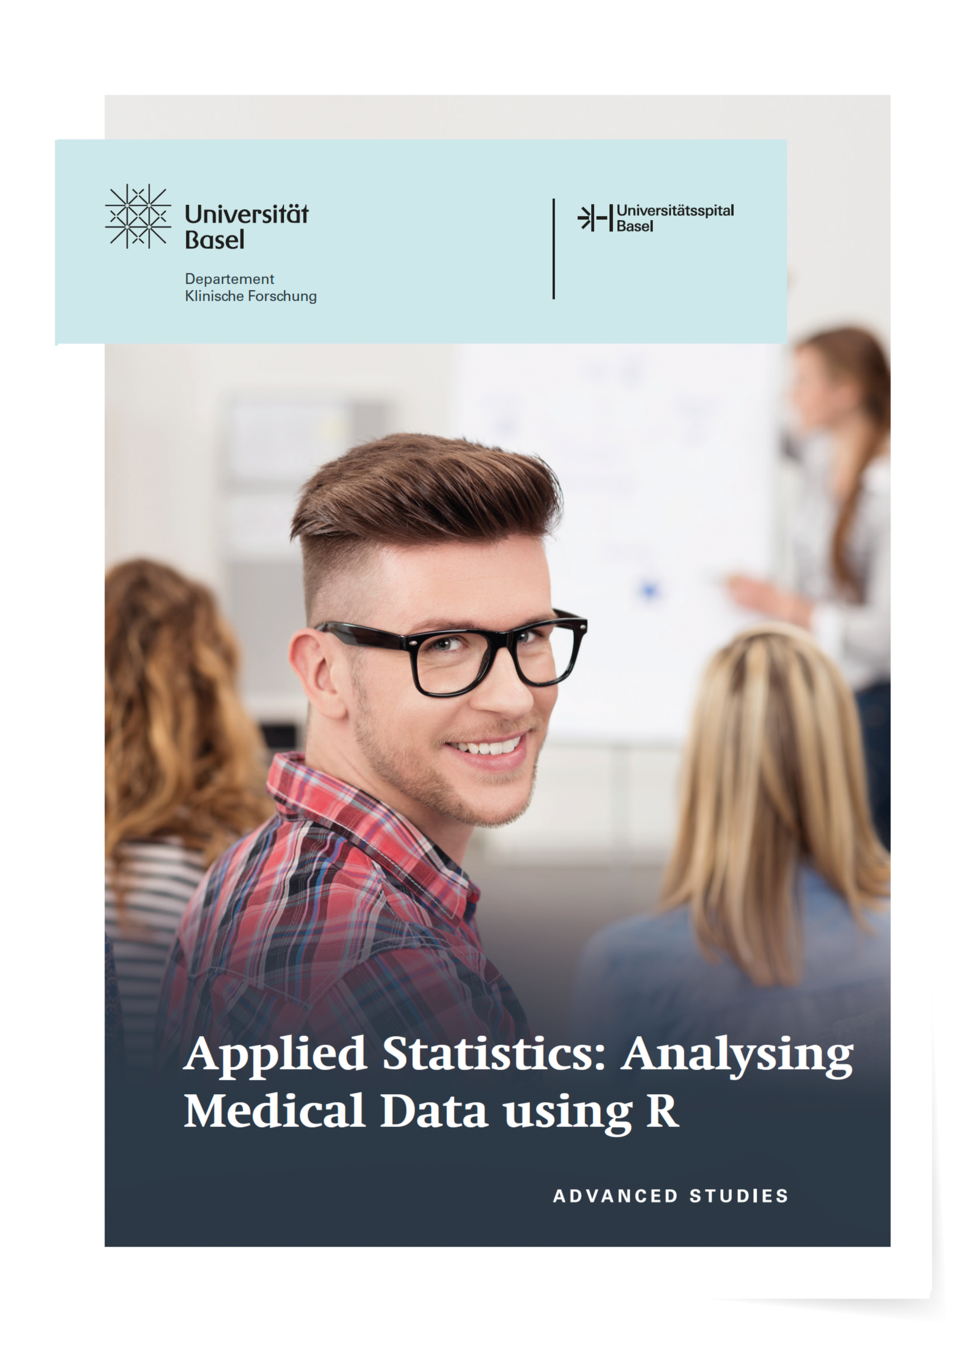 Applied Statistics using R: Analysing Medical Data